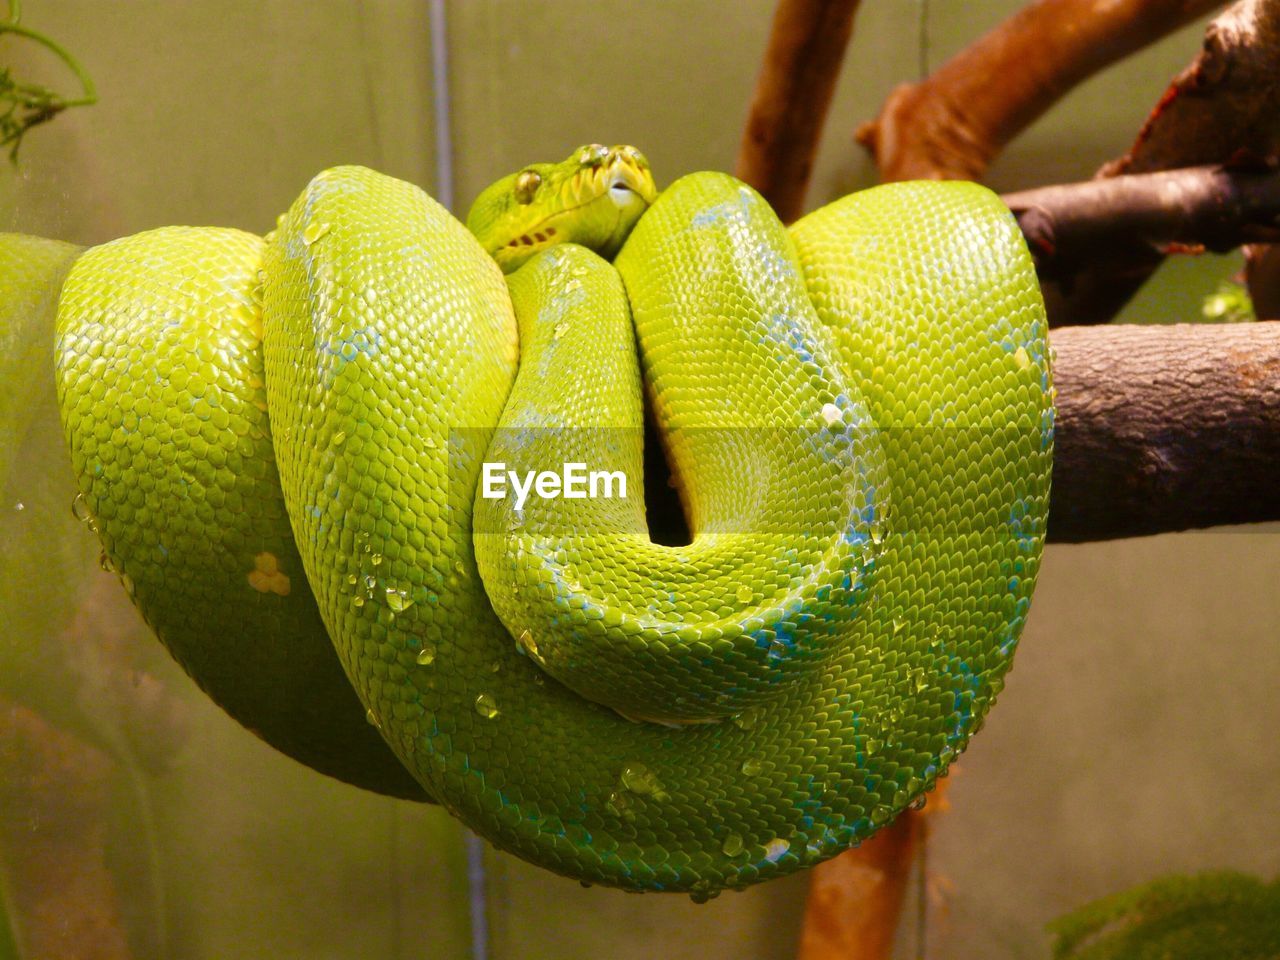 Close-up of green snake